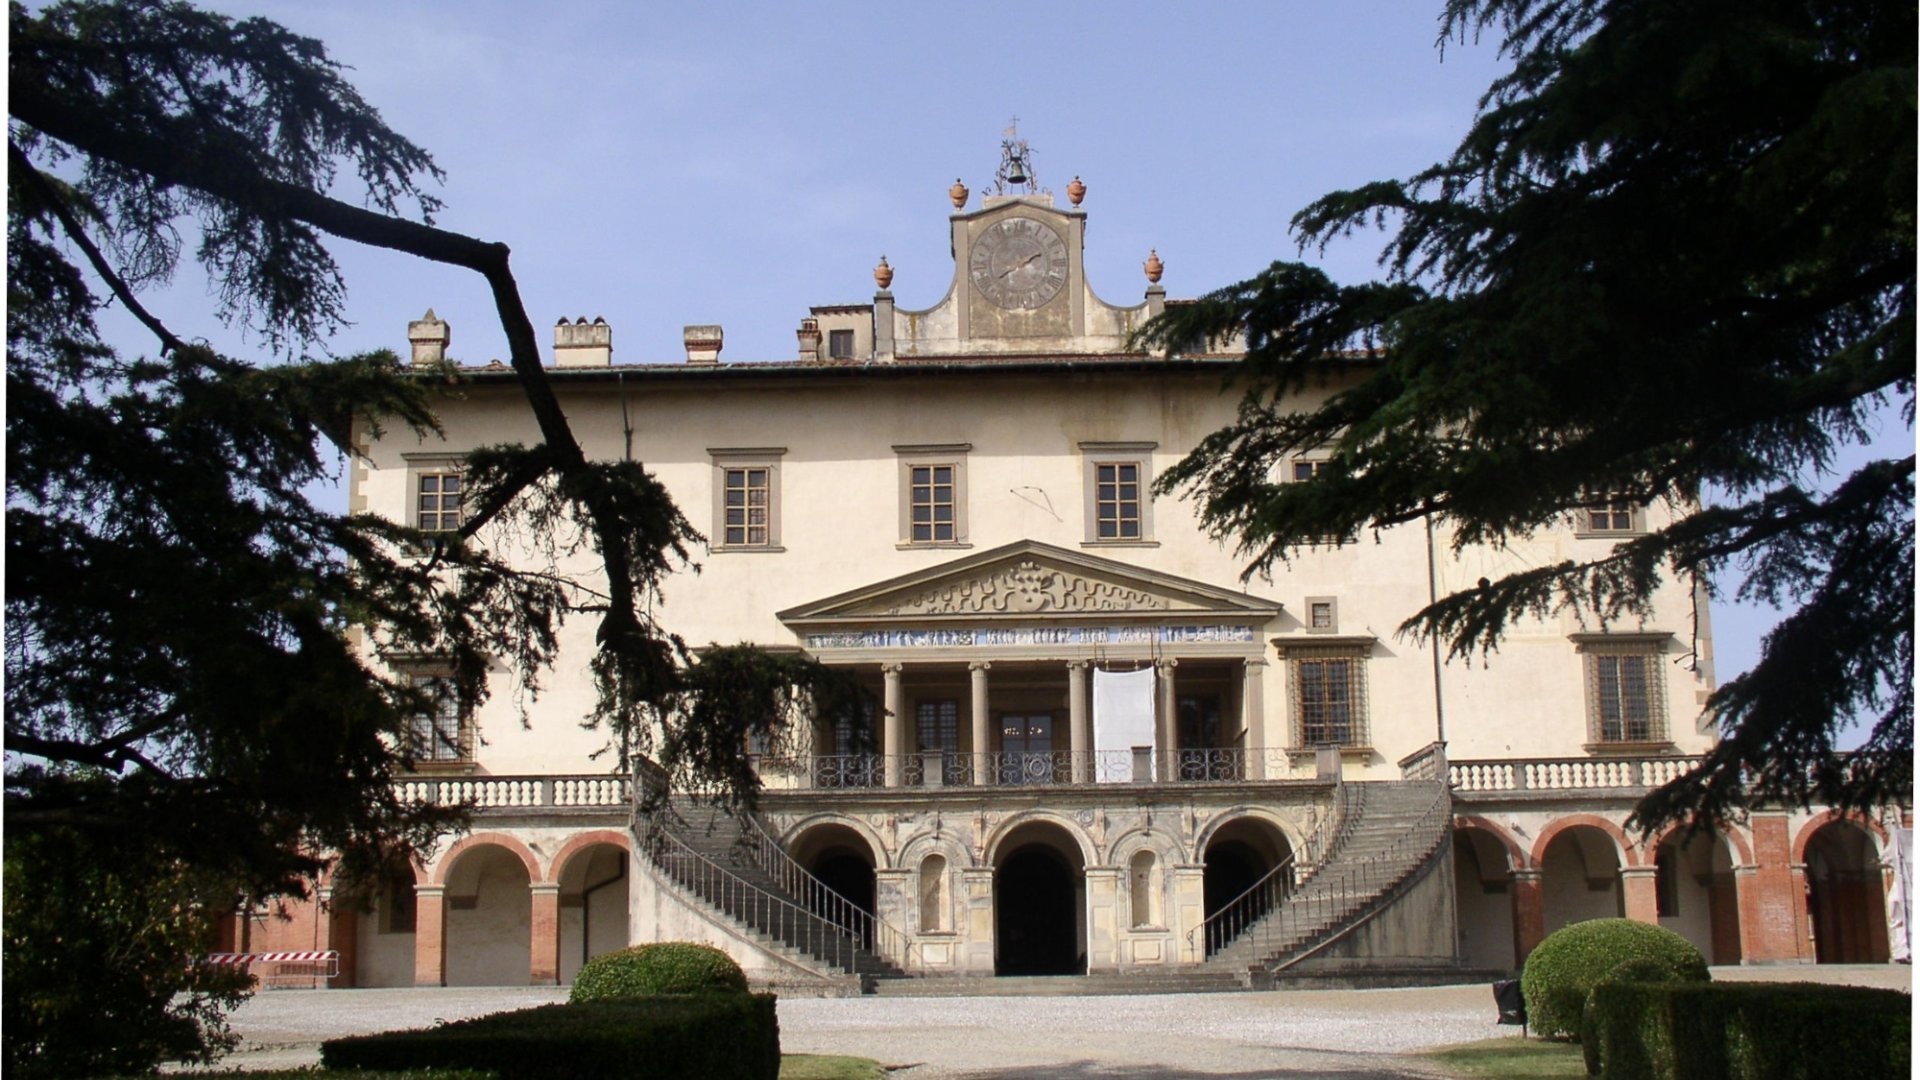 Die Villa Medici in Poggio a Caiano